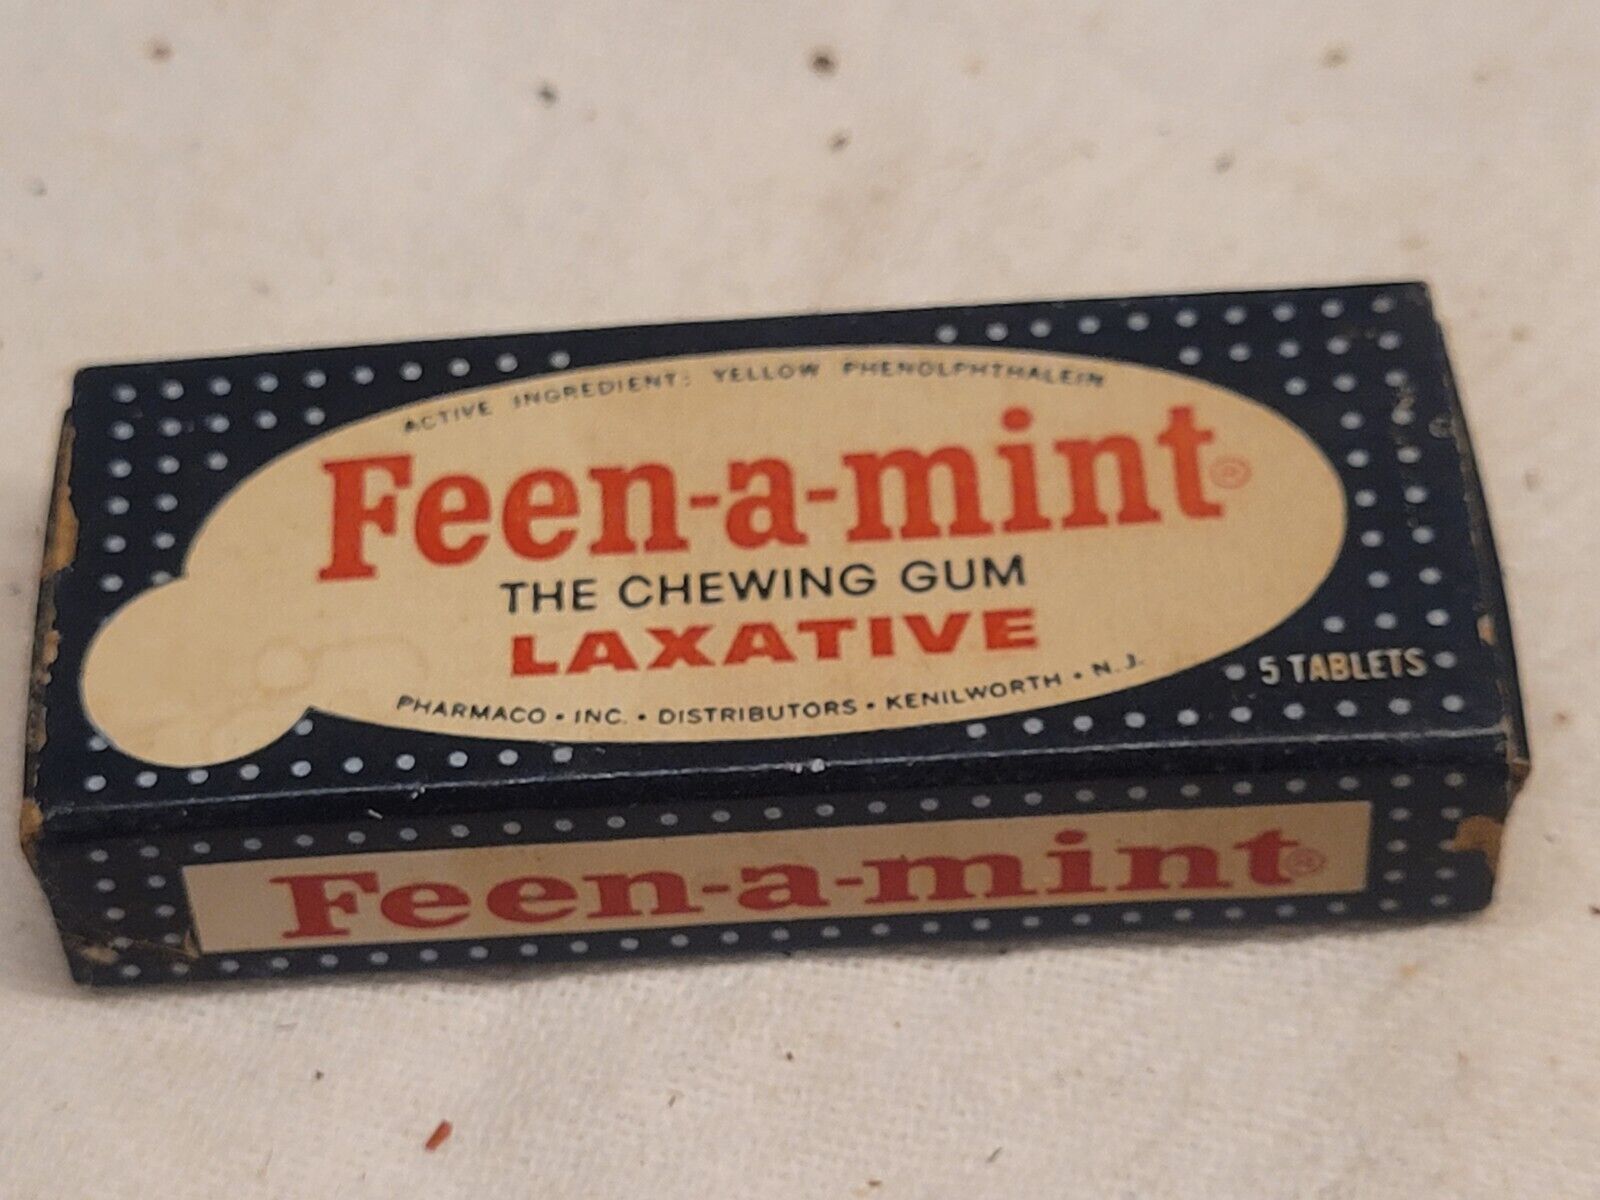 VINTAGE FEEN-A-MINT CHEWING GUM ORIGINAL